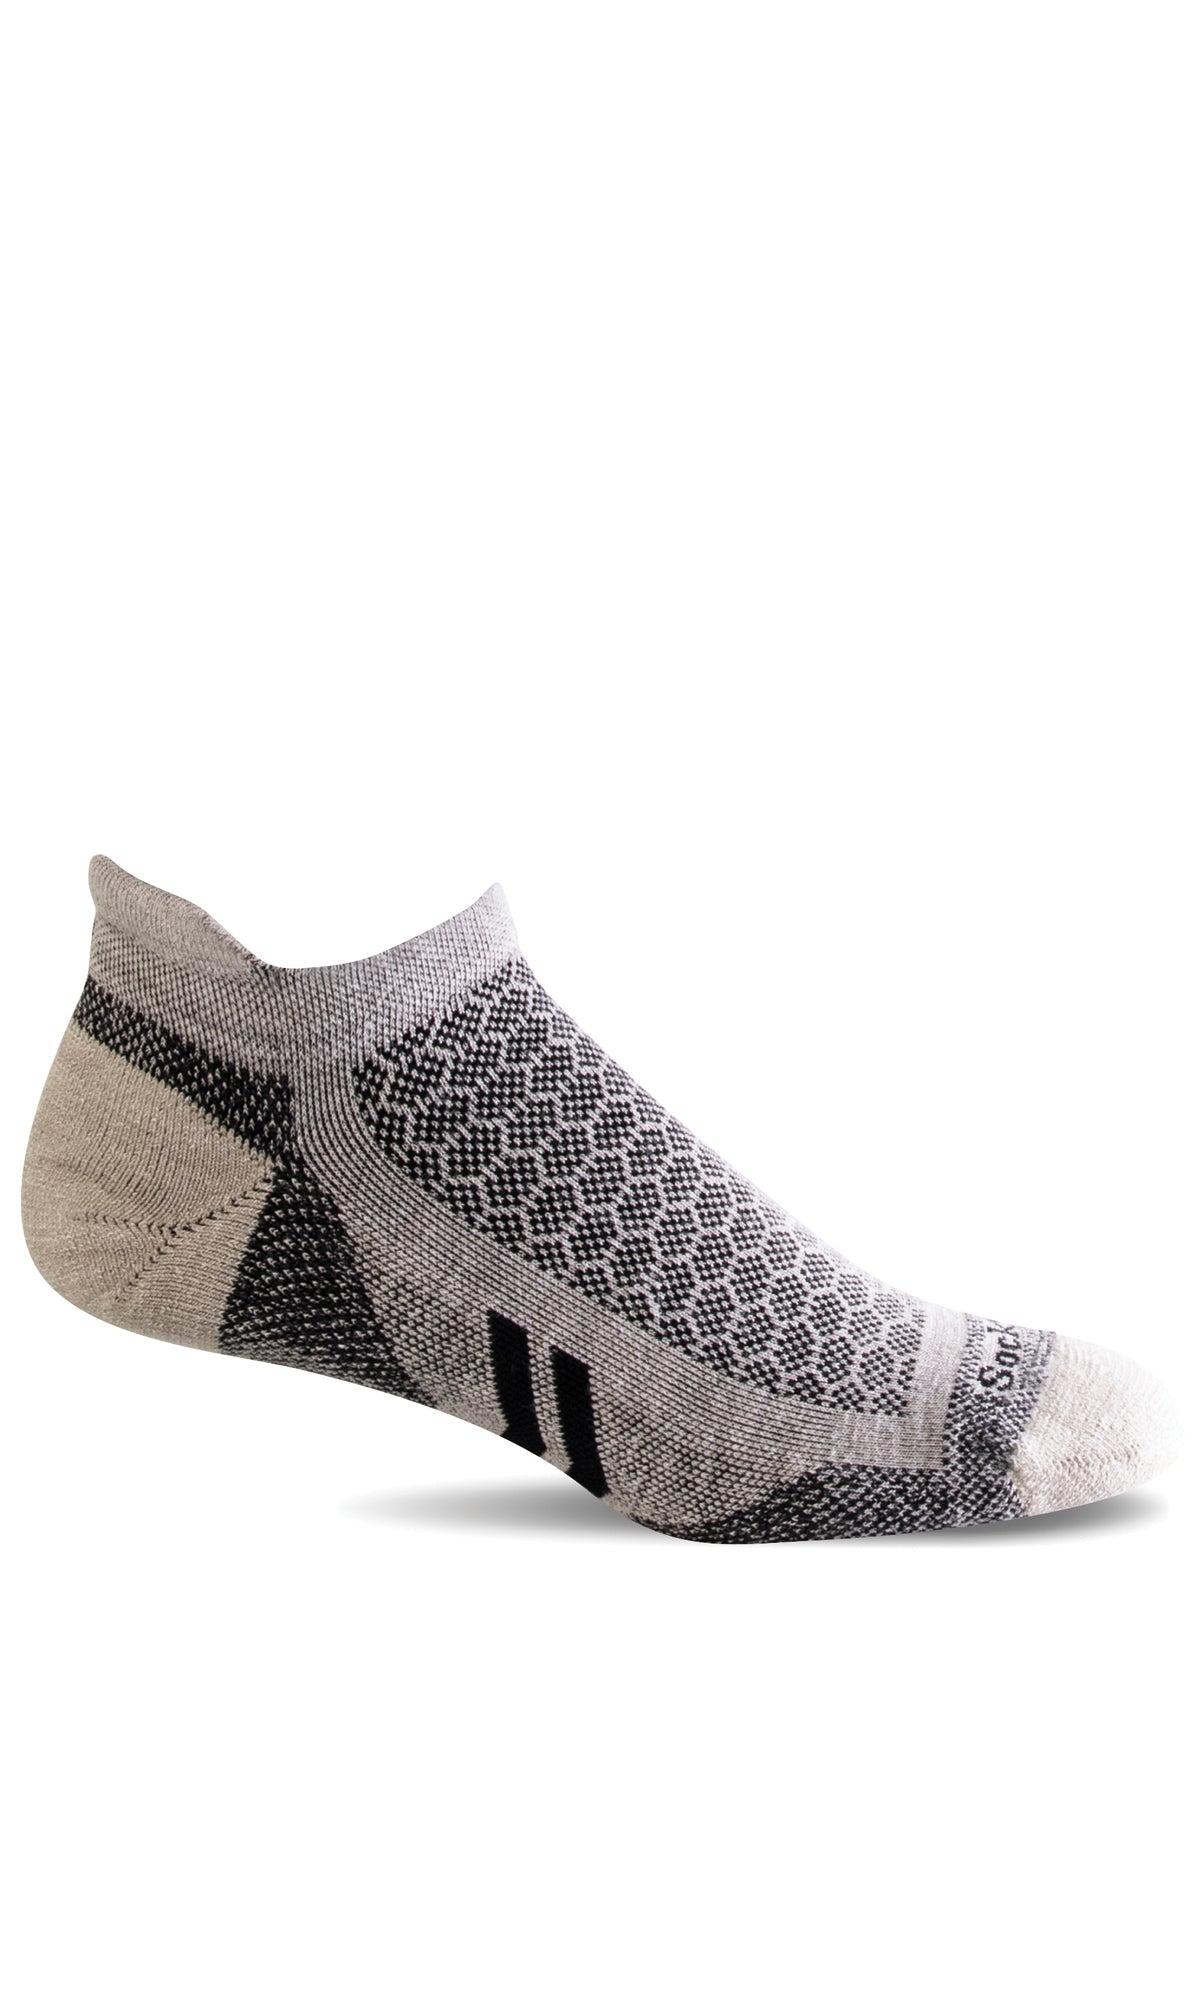 Men's Incline II Micro | Moderate Compression Socks - Merino Wool Sport Compression - Sockwell